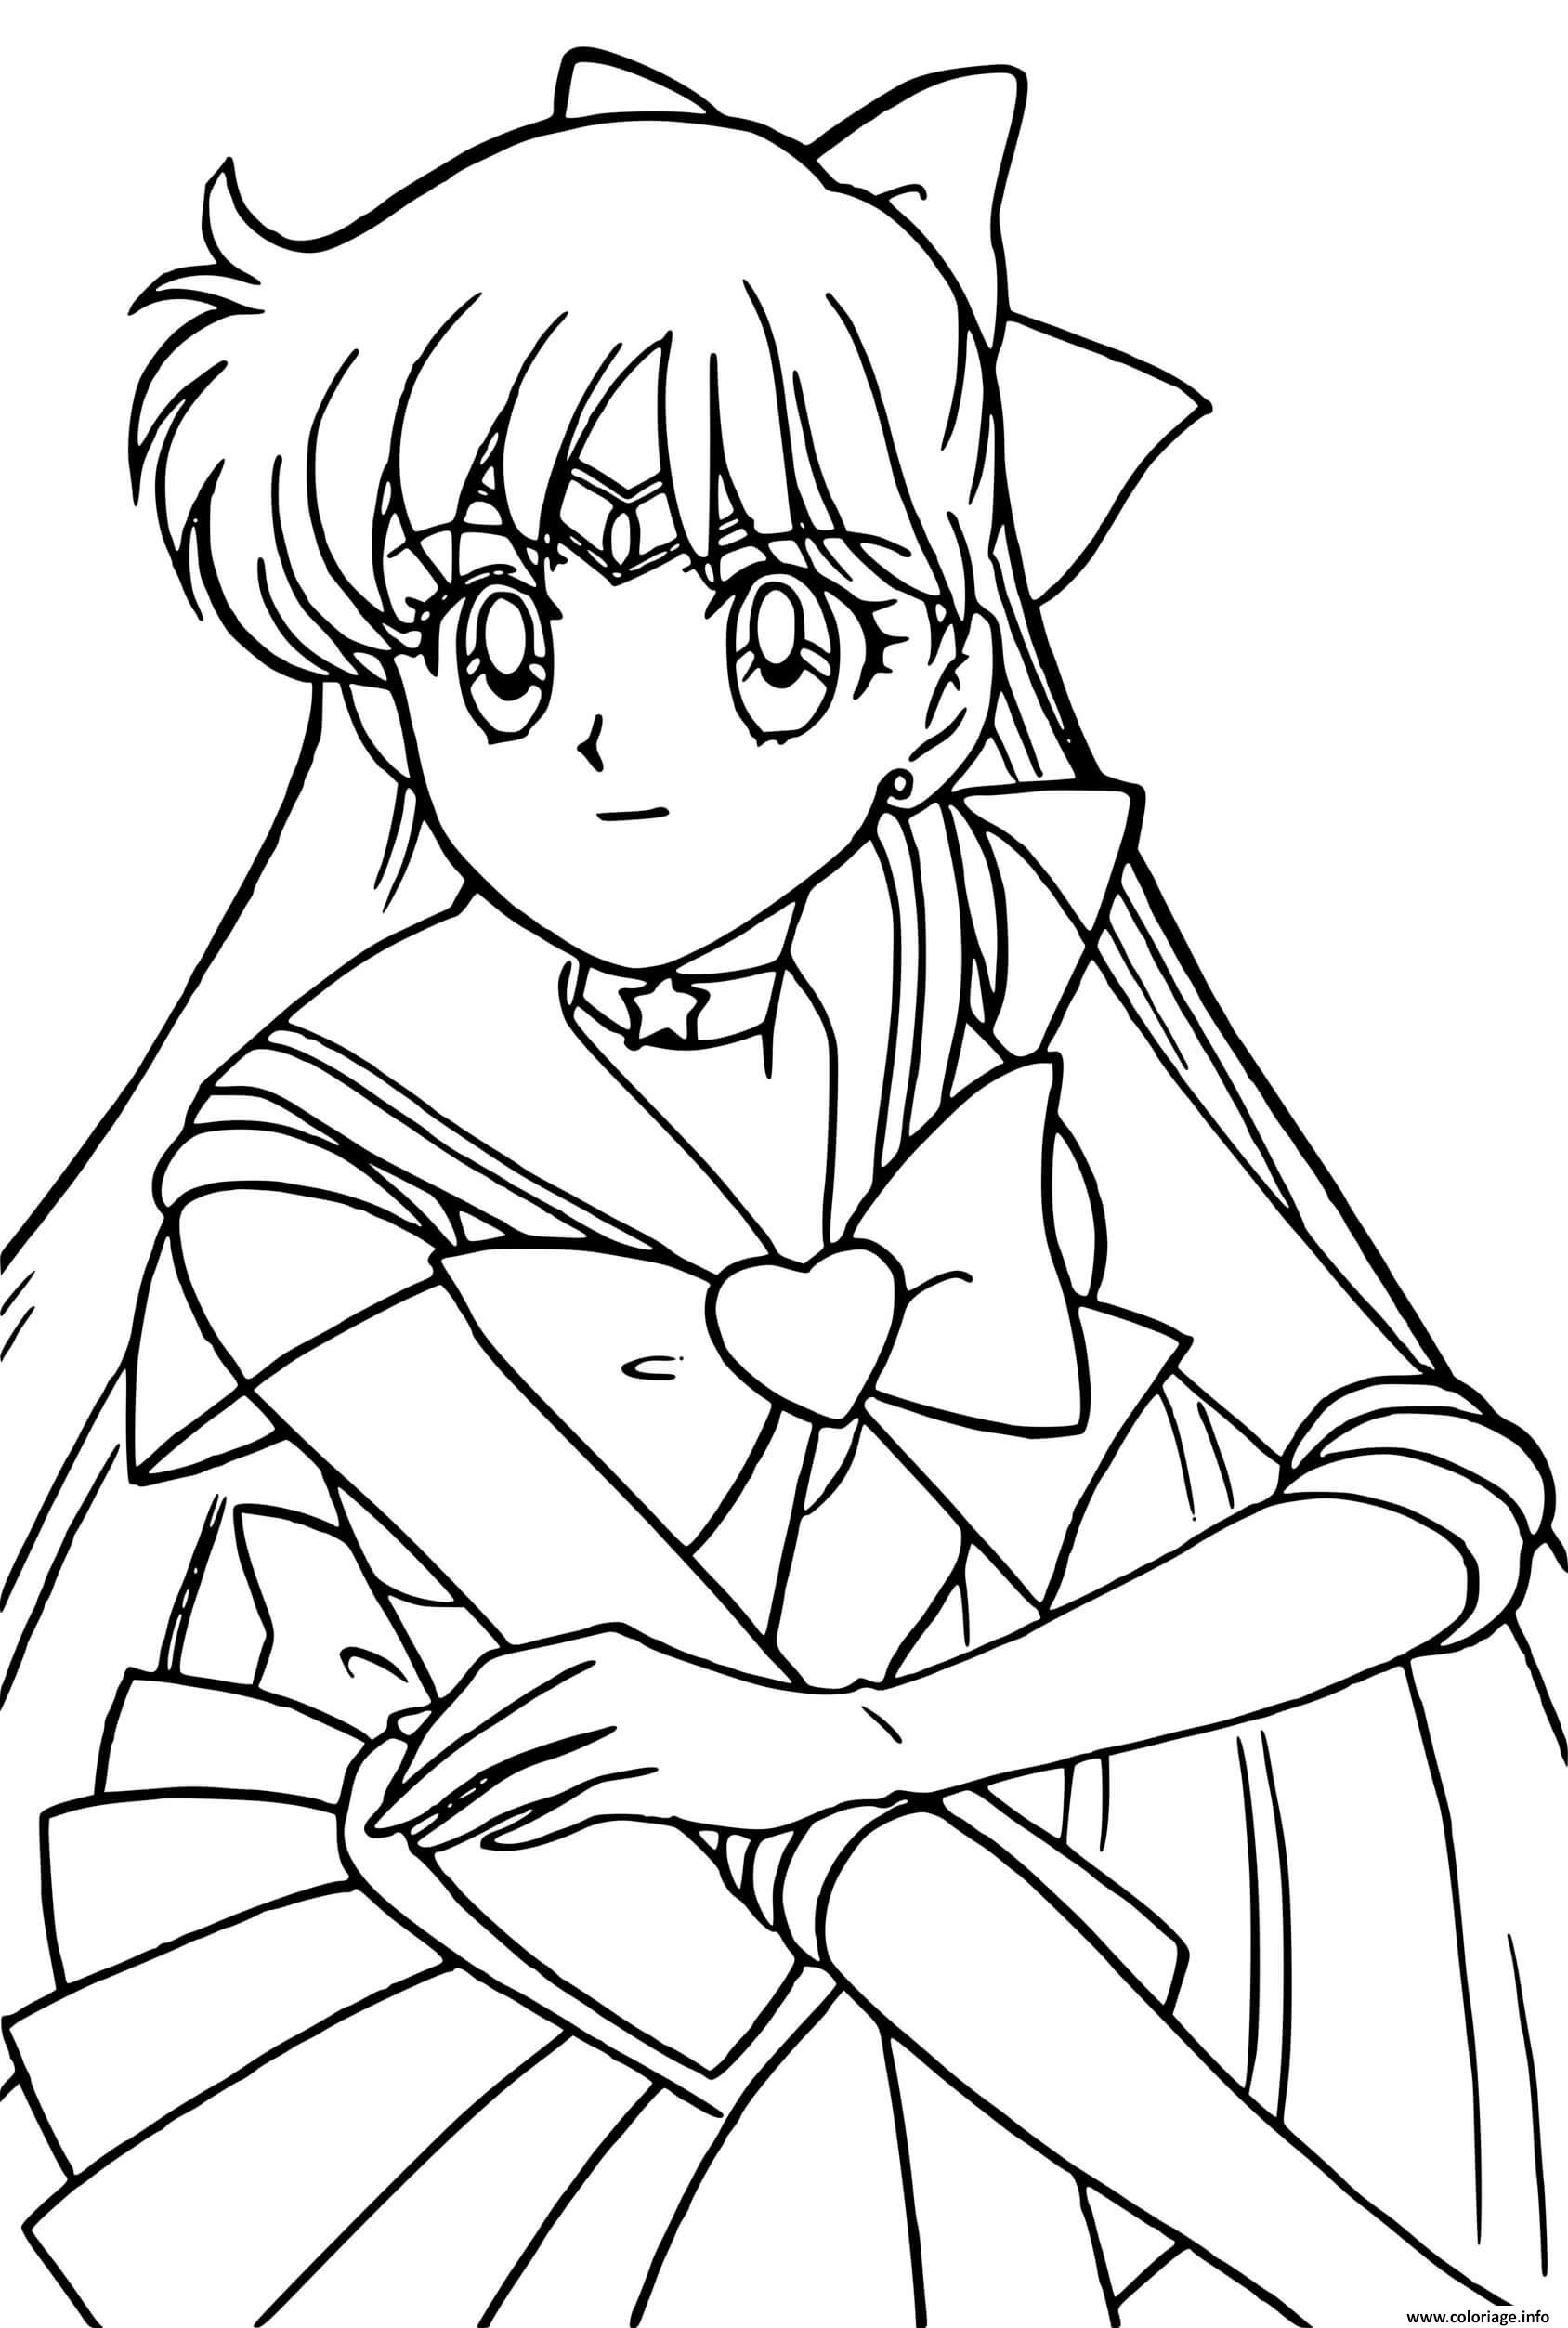 Coloriage Sailor Moon Venus Dessin à Imprimer